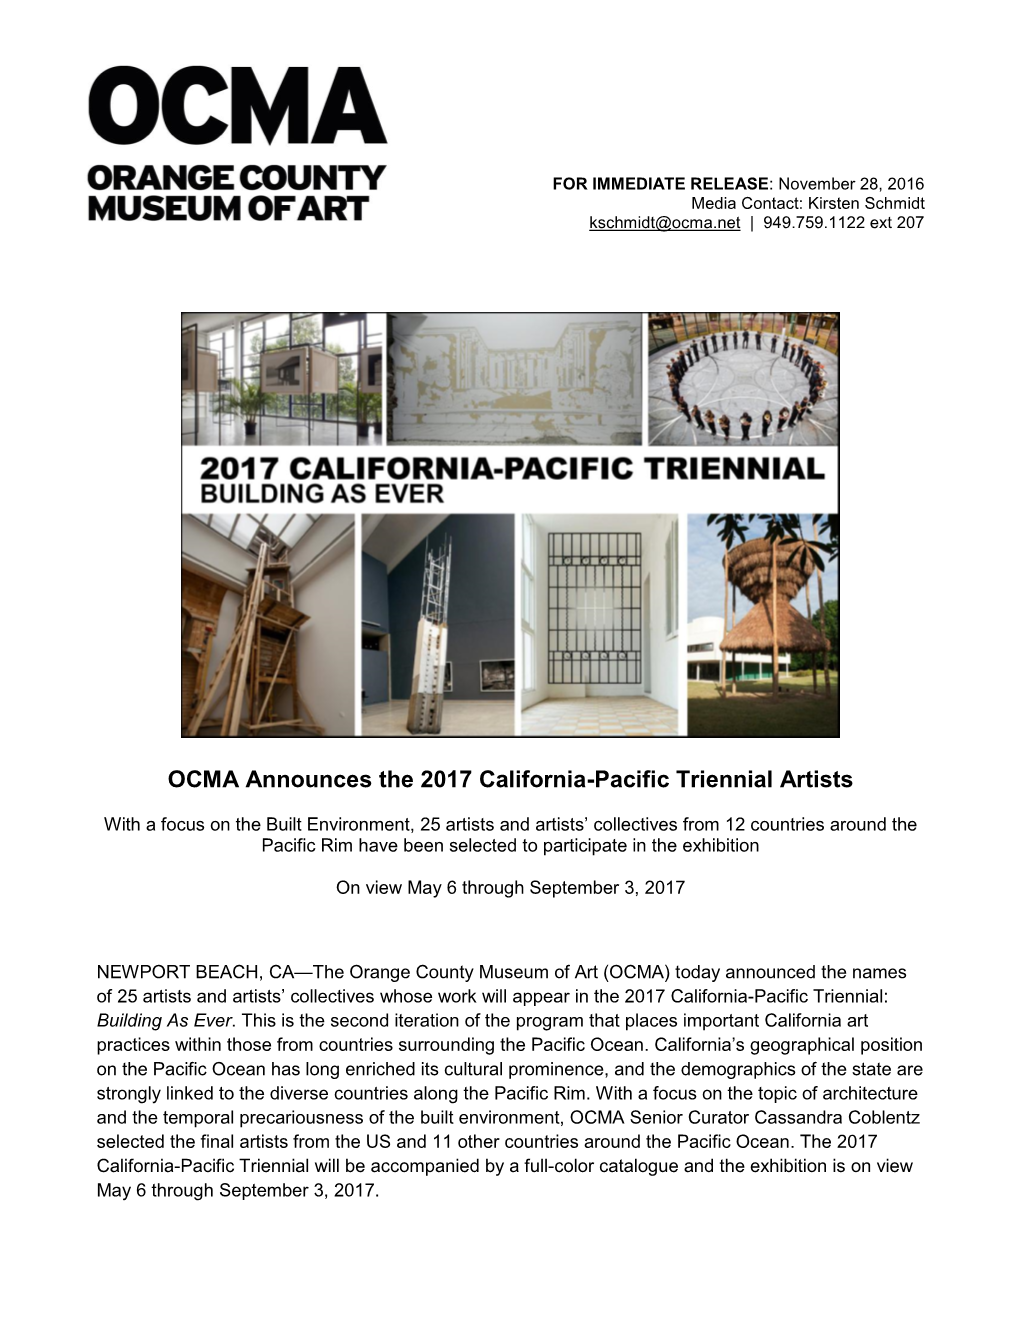 OCMA Announces the 2017 California-Pacific Triennial Artists